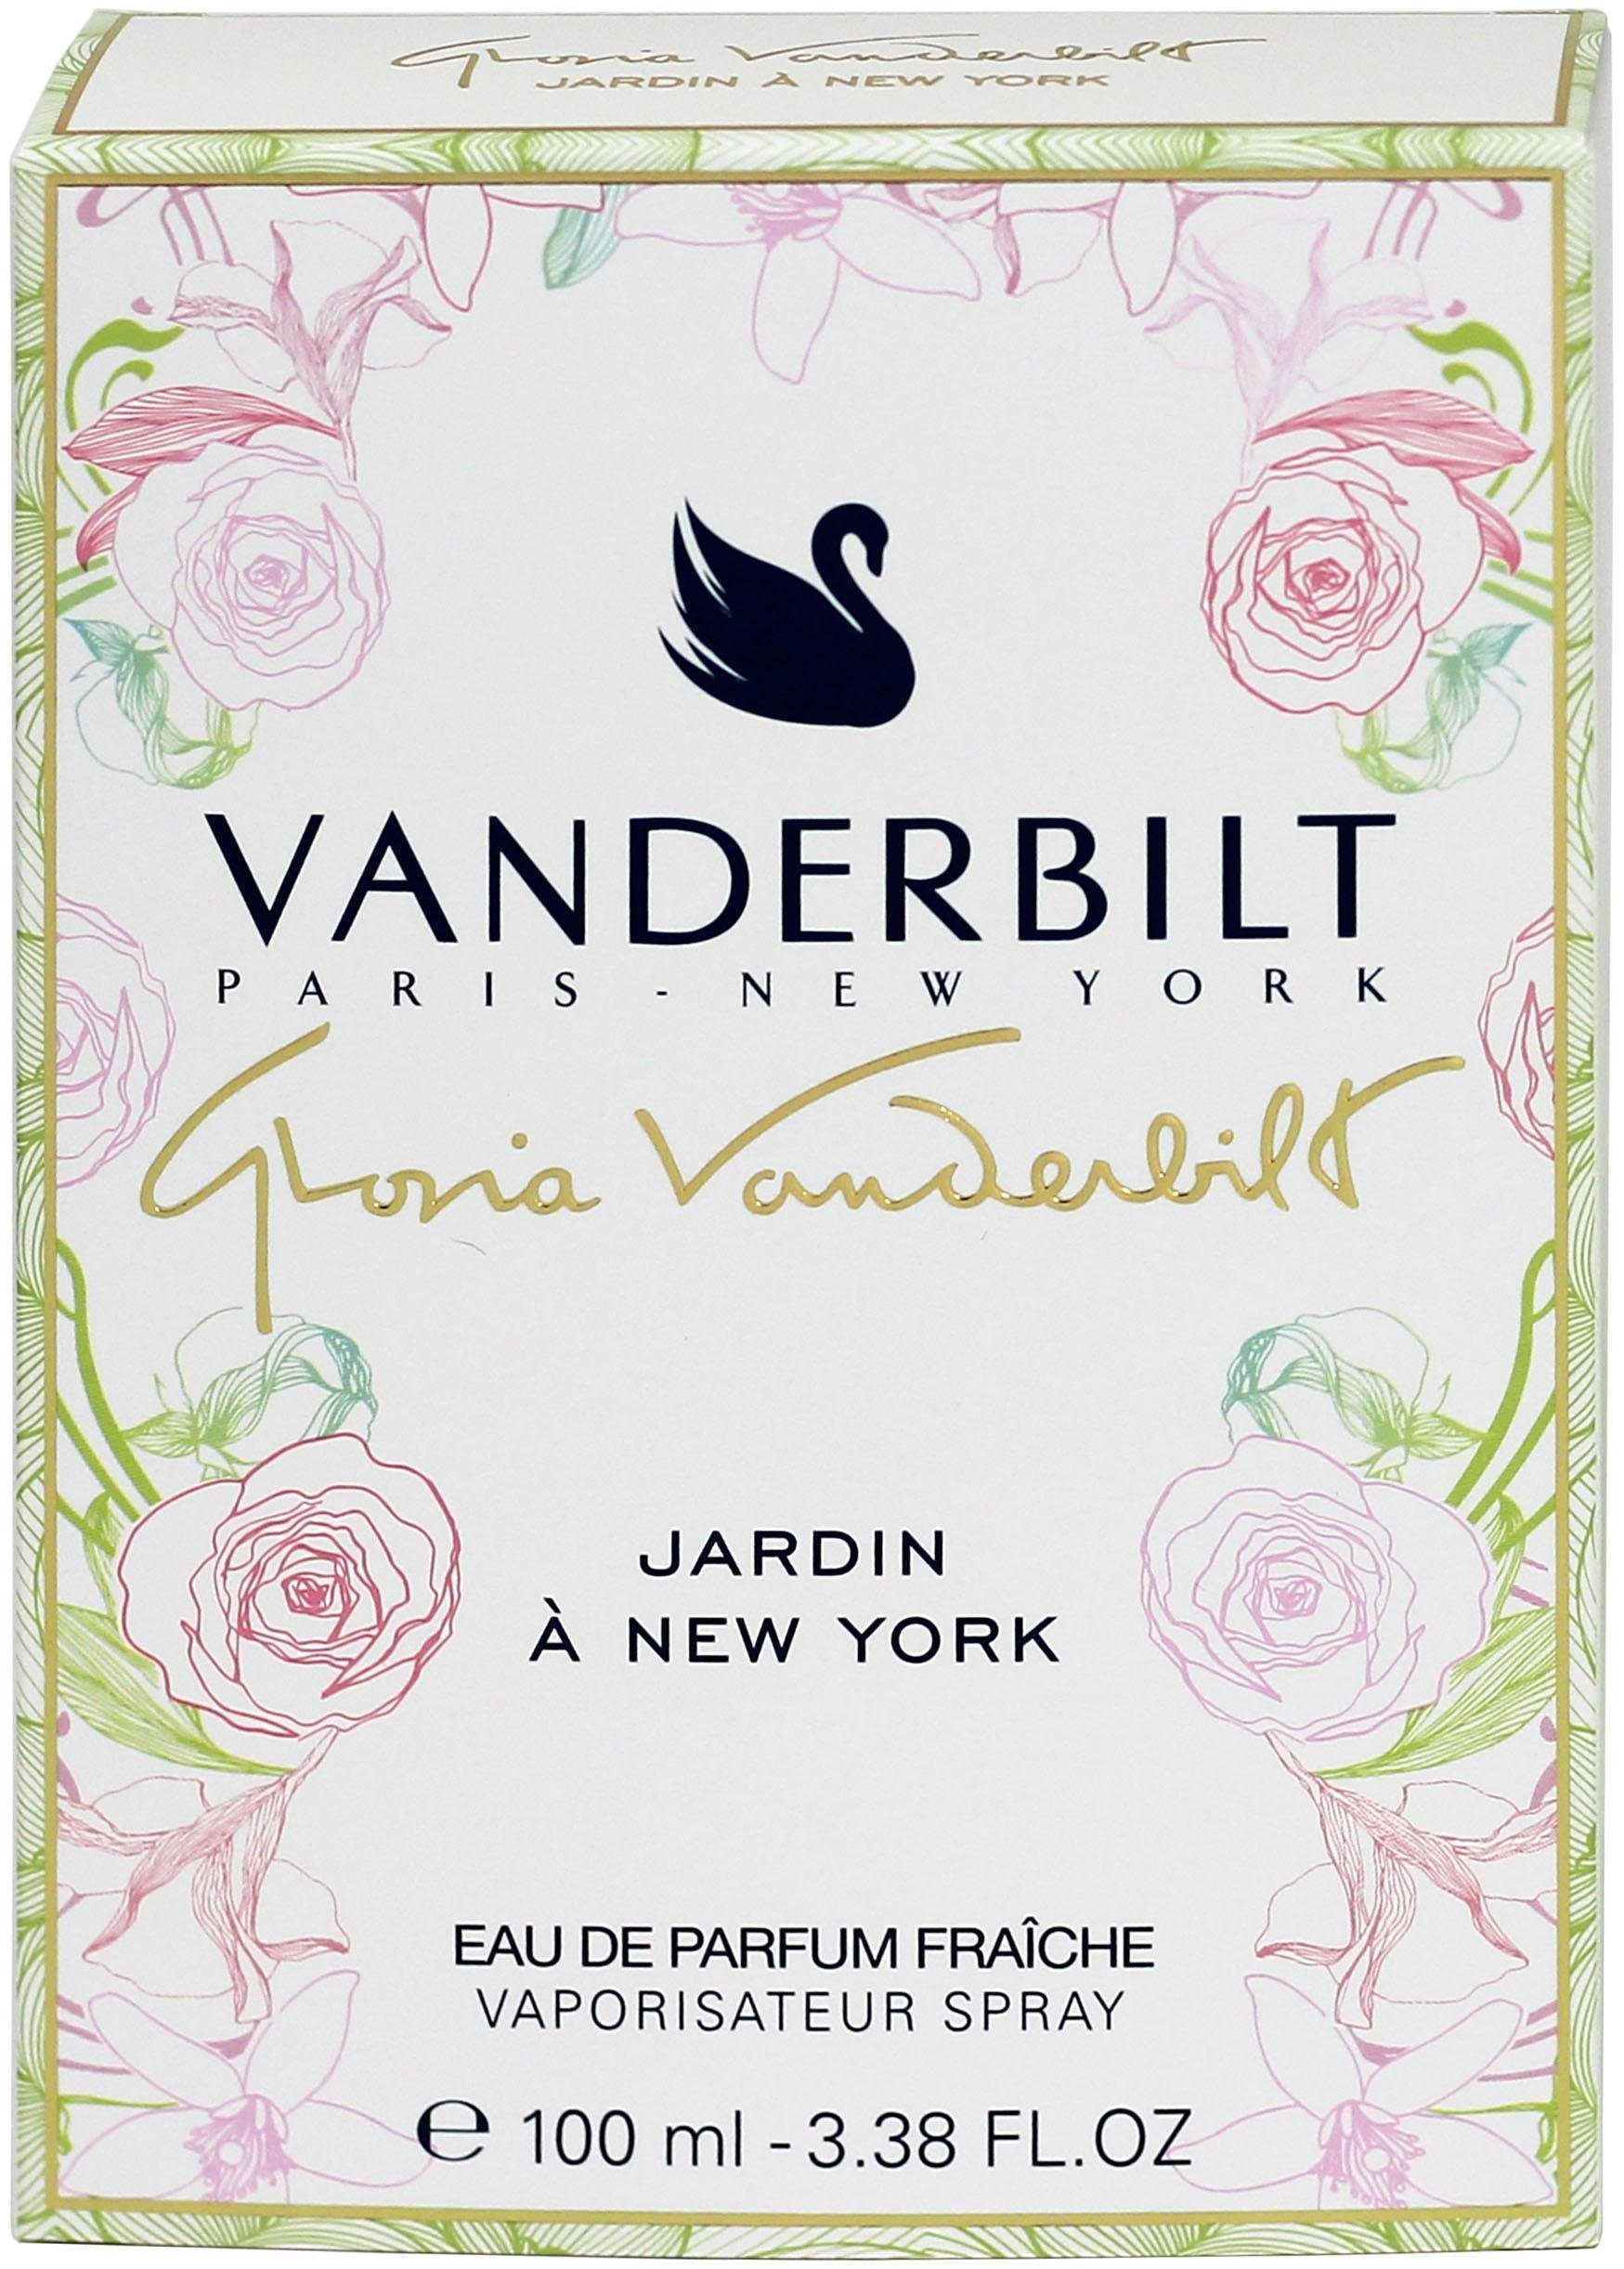 VANDERBILT Eau Vanderbilt New Jardin York á de Parfum